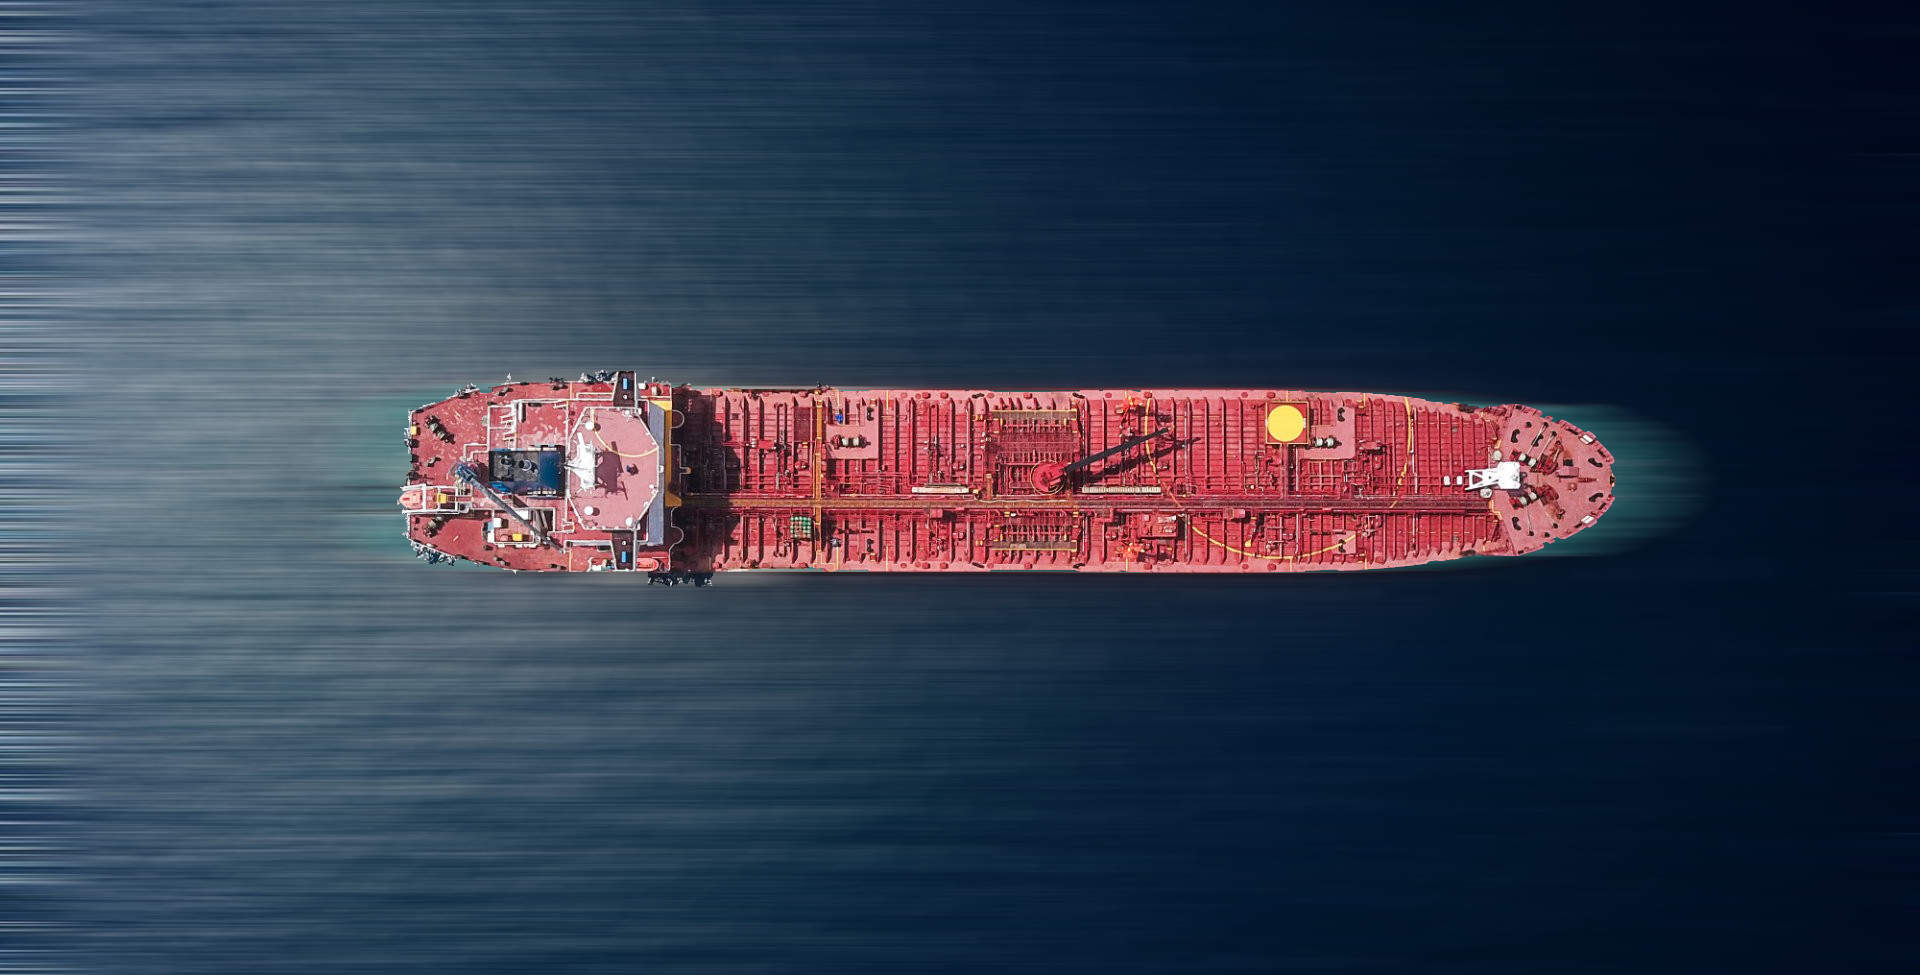 Fotografia aerea de barco portacontenedores